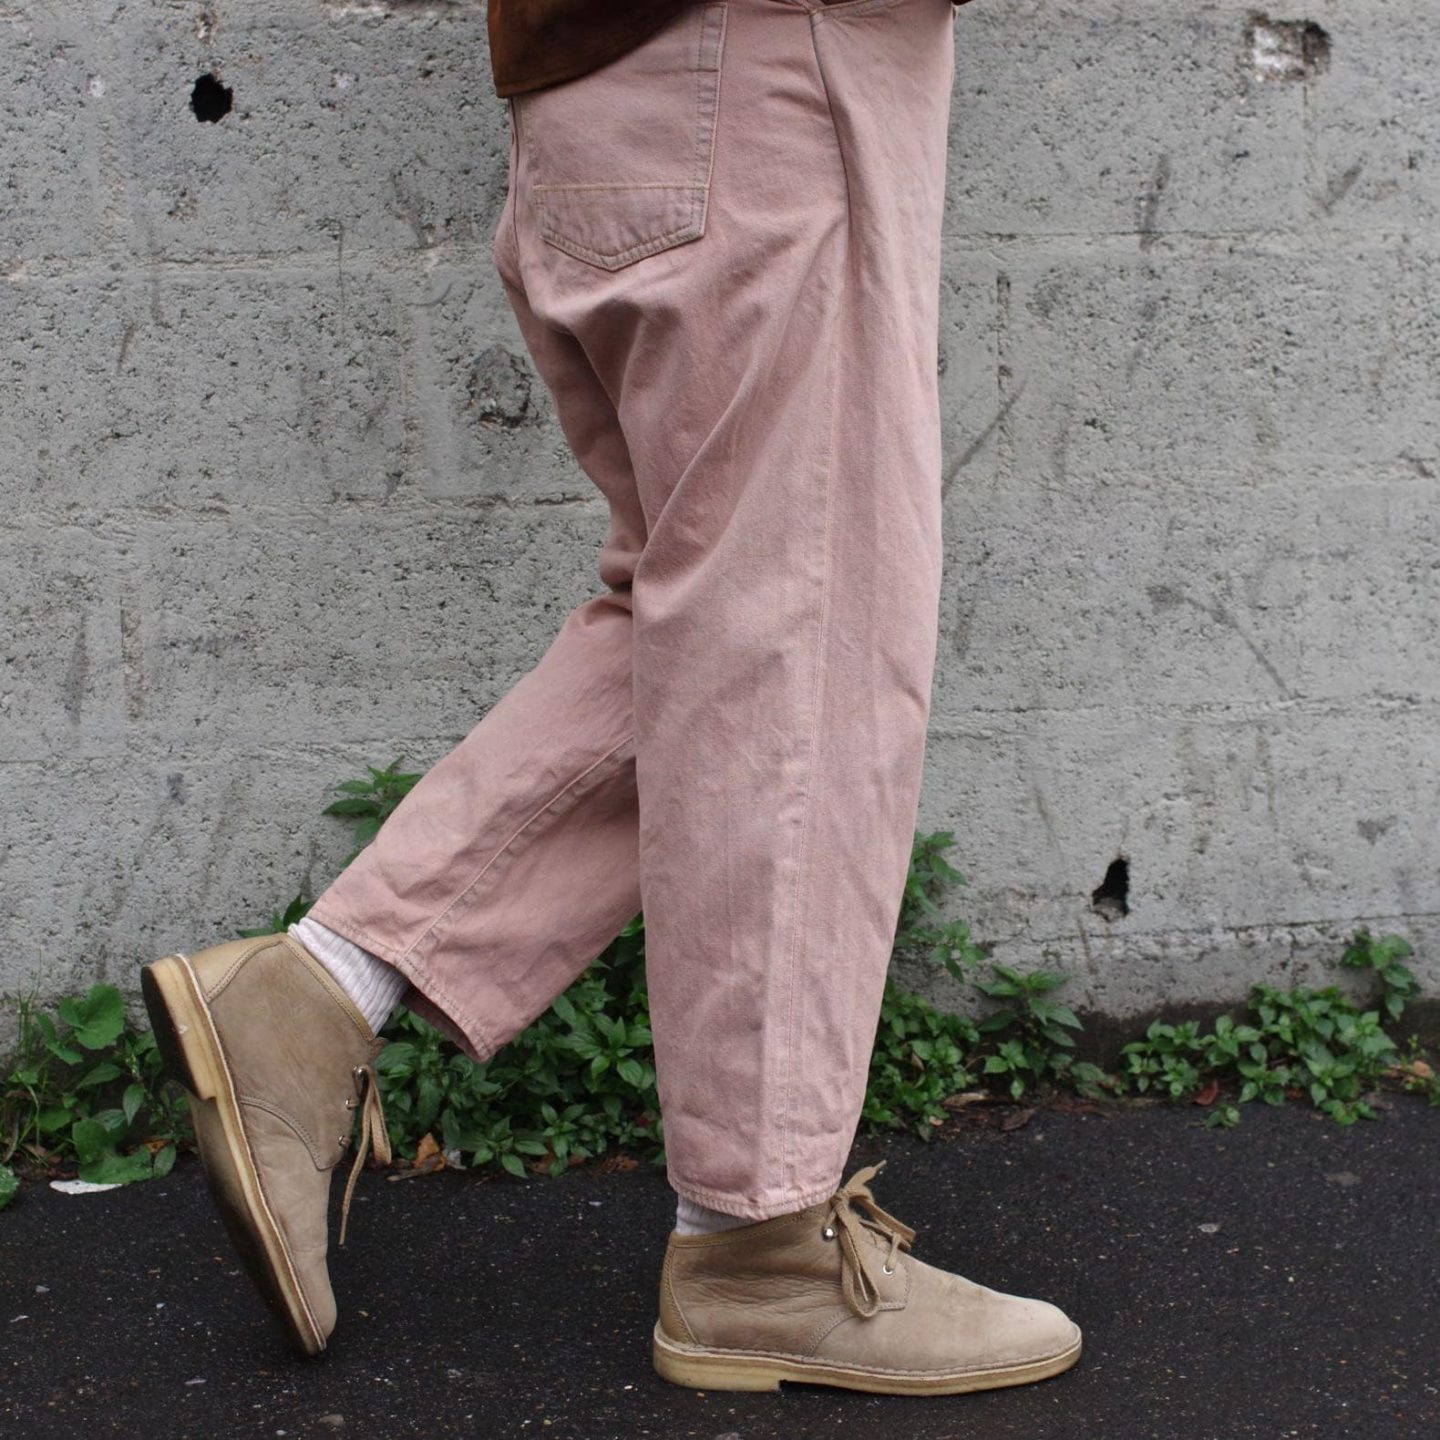 pantalon ample rose et desert boots clarks supreme